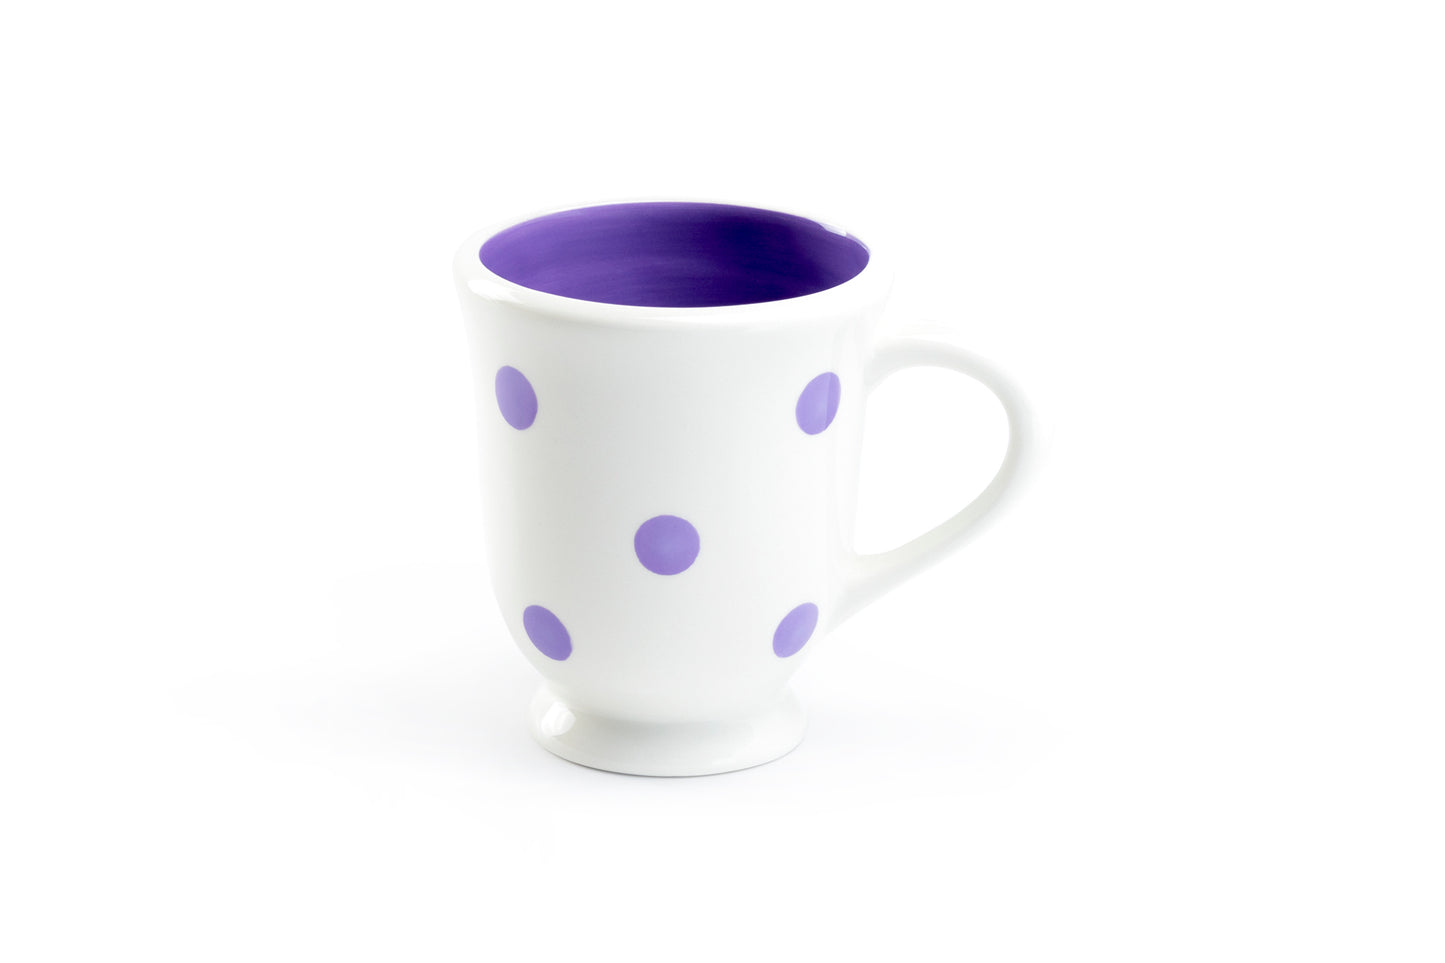 Terramoto Ceramic Polka Dots Mug - Lavender on White